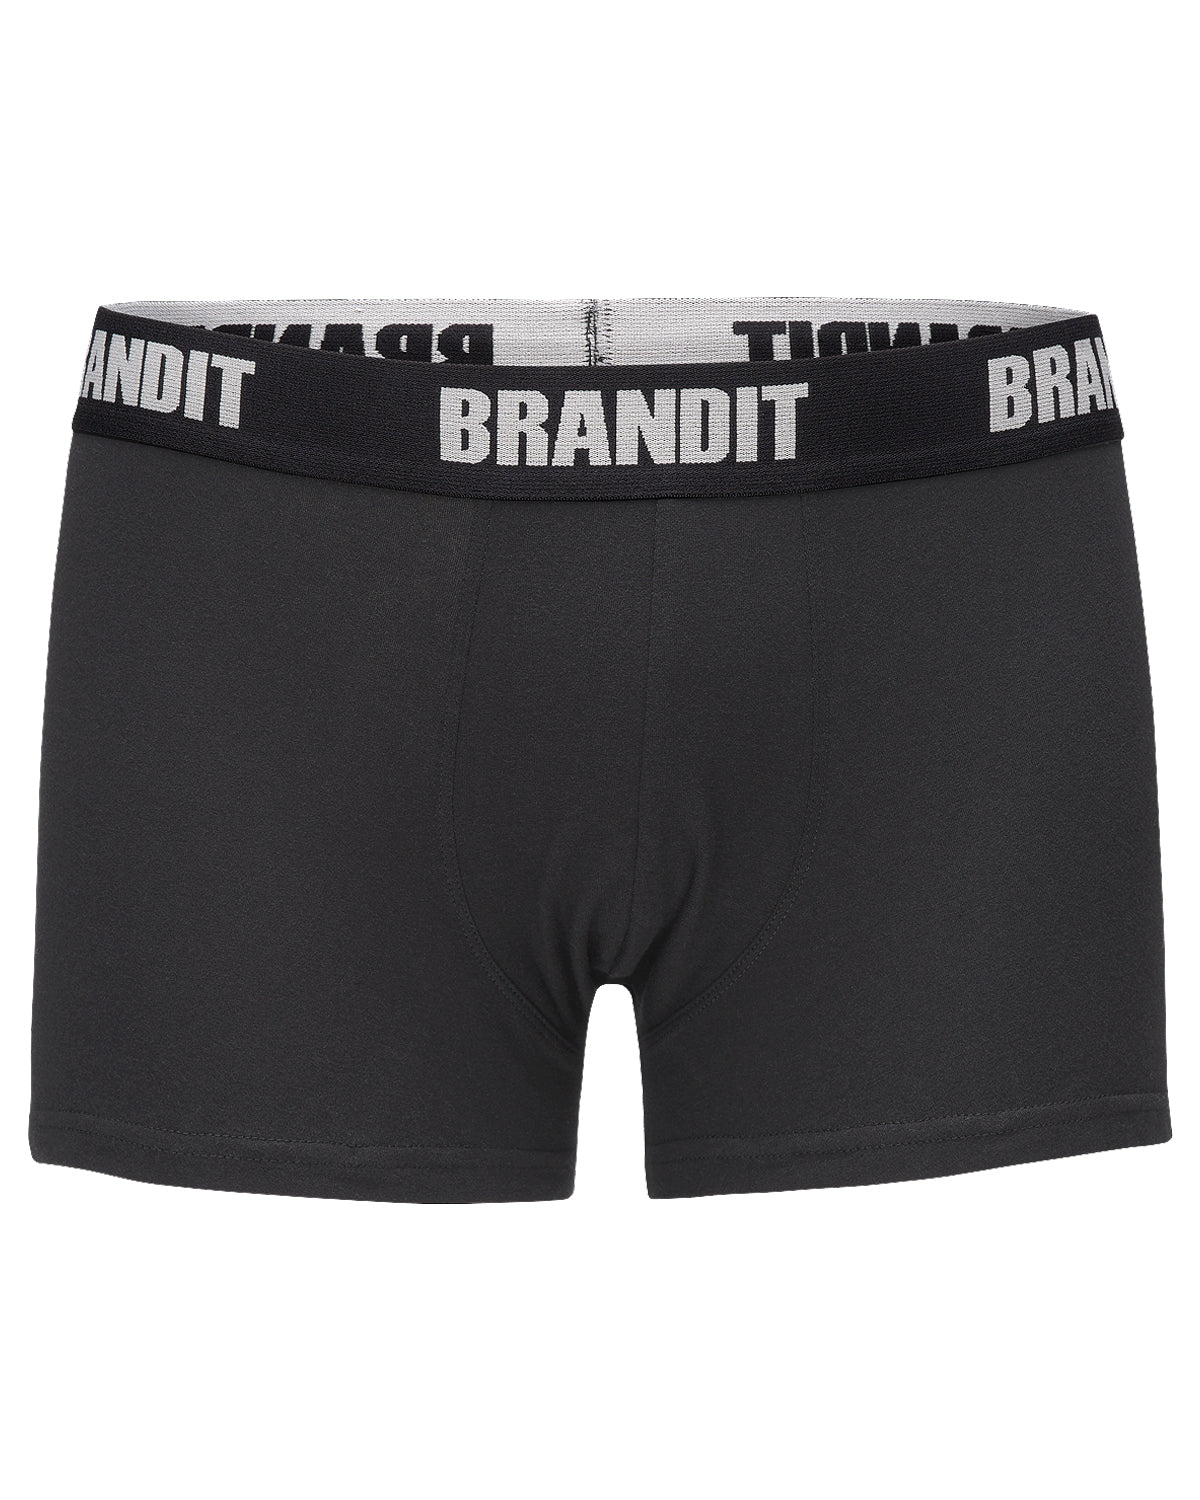 Brandit Brandit logo bokserit 2-pack - Camo & Musta